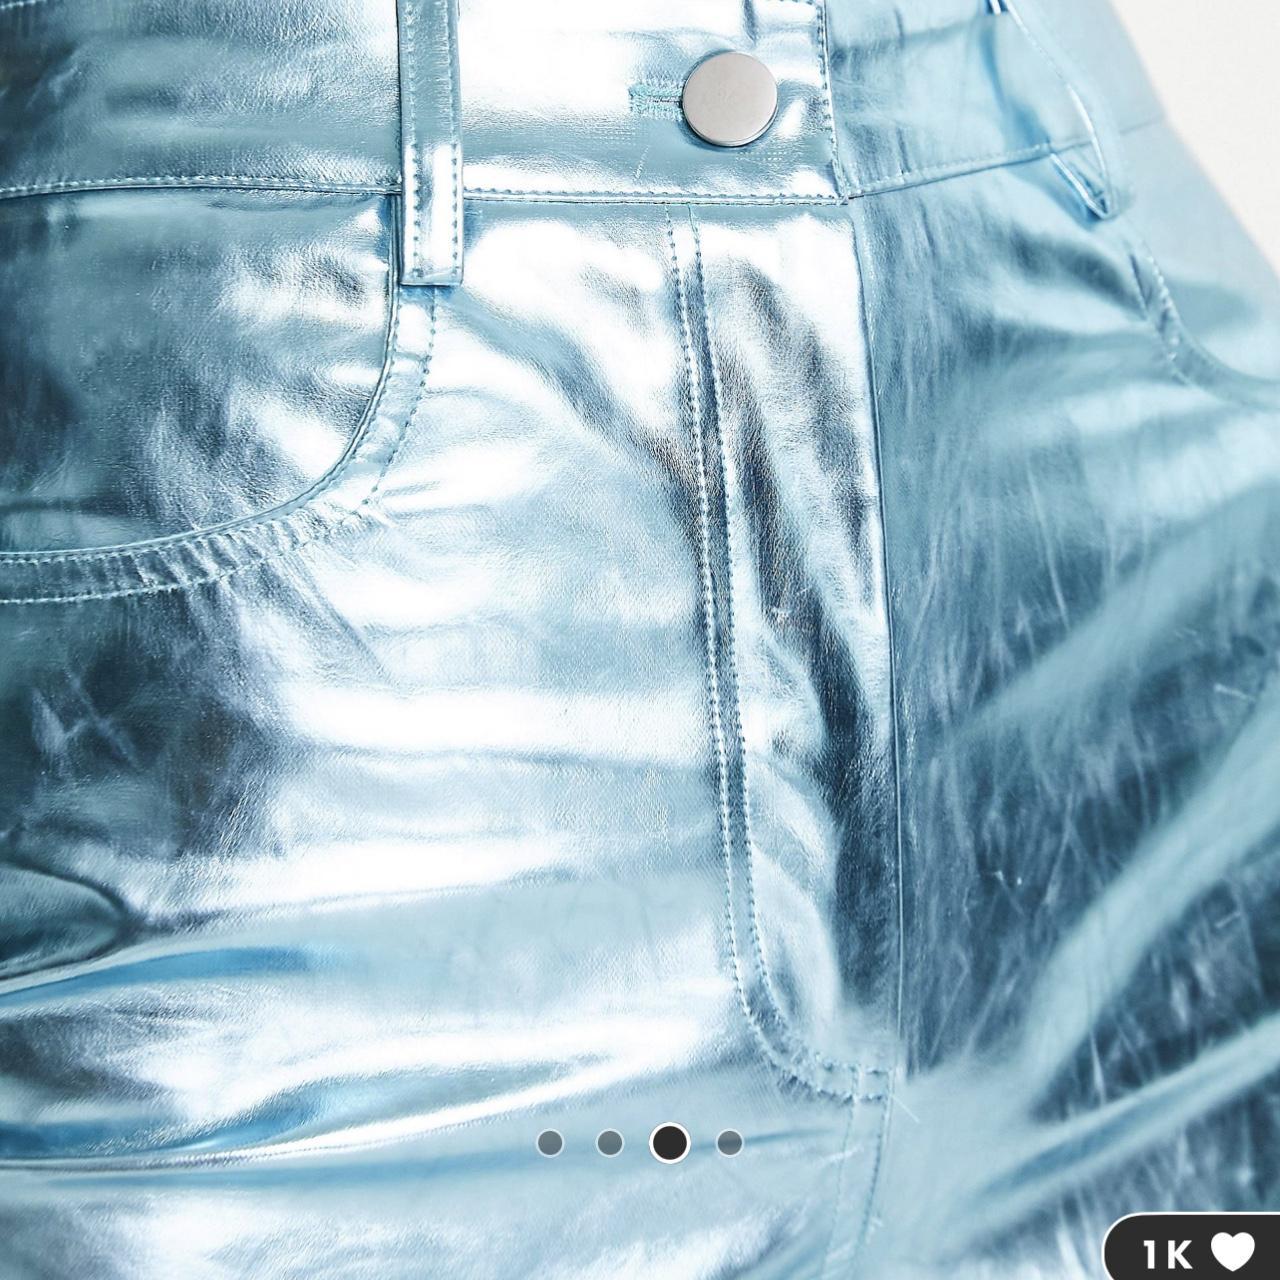 amy lynn metallic pants Brand new with tags - Depop